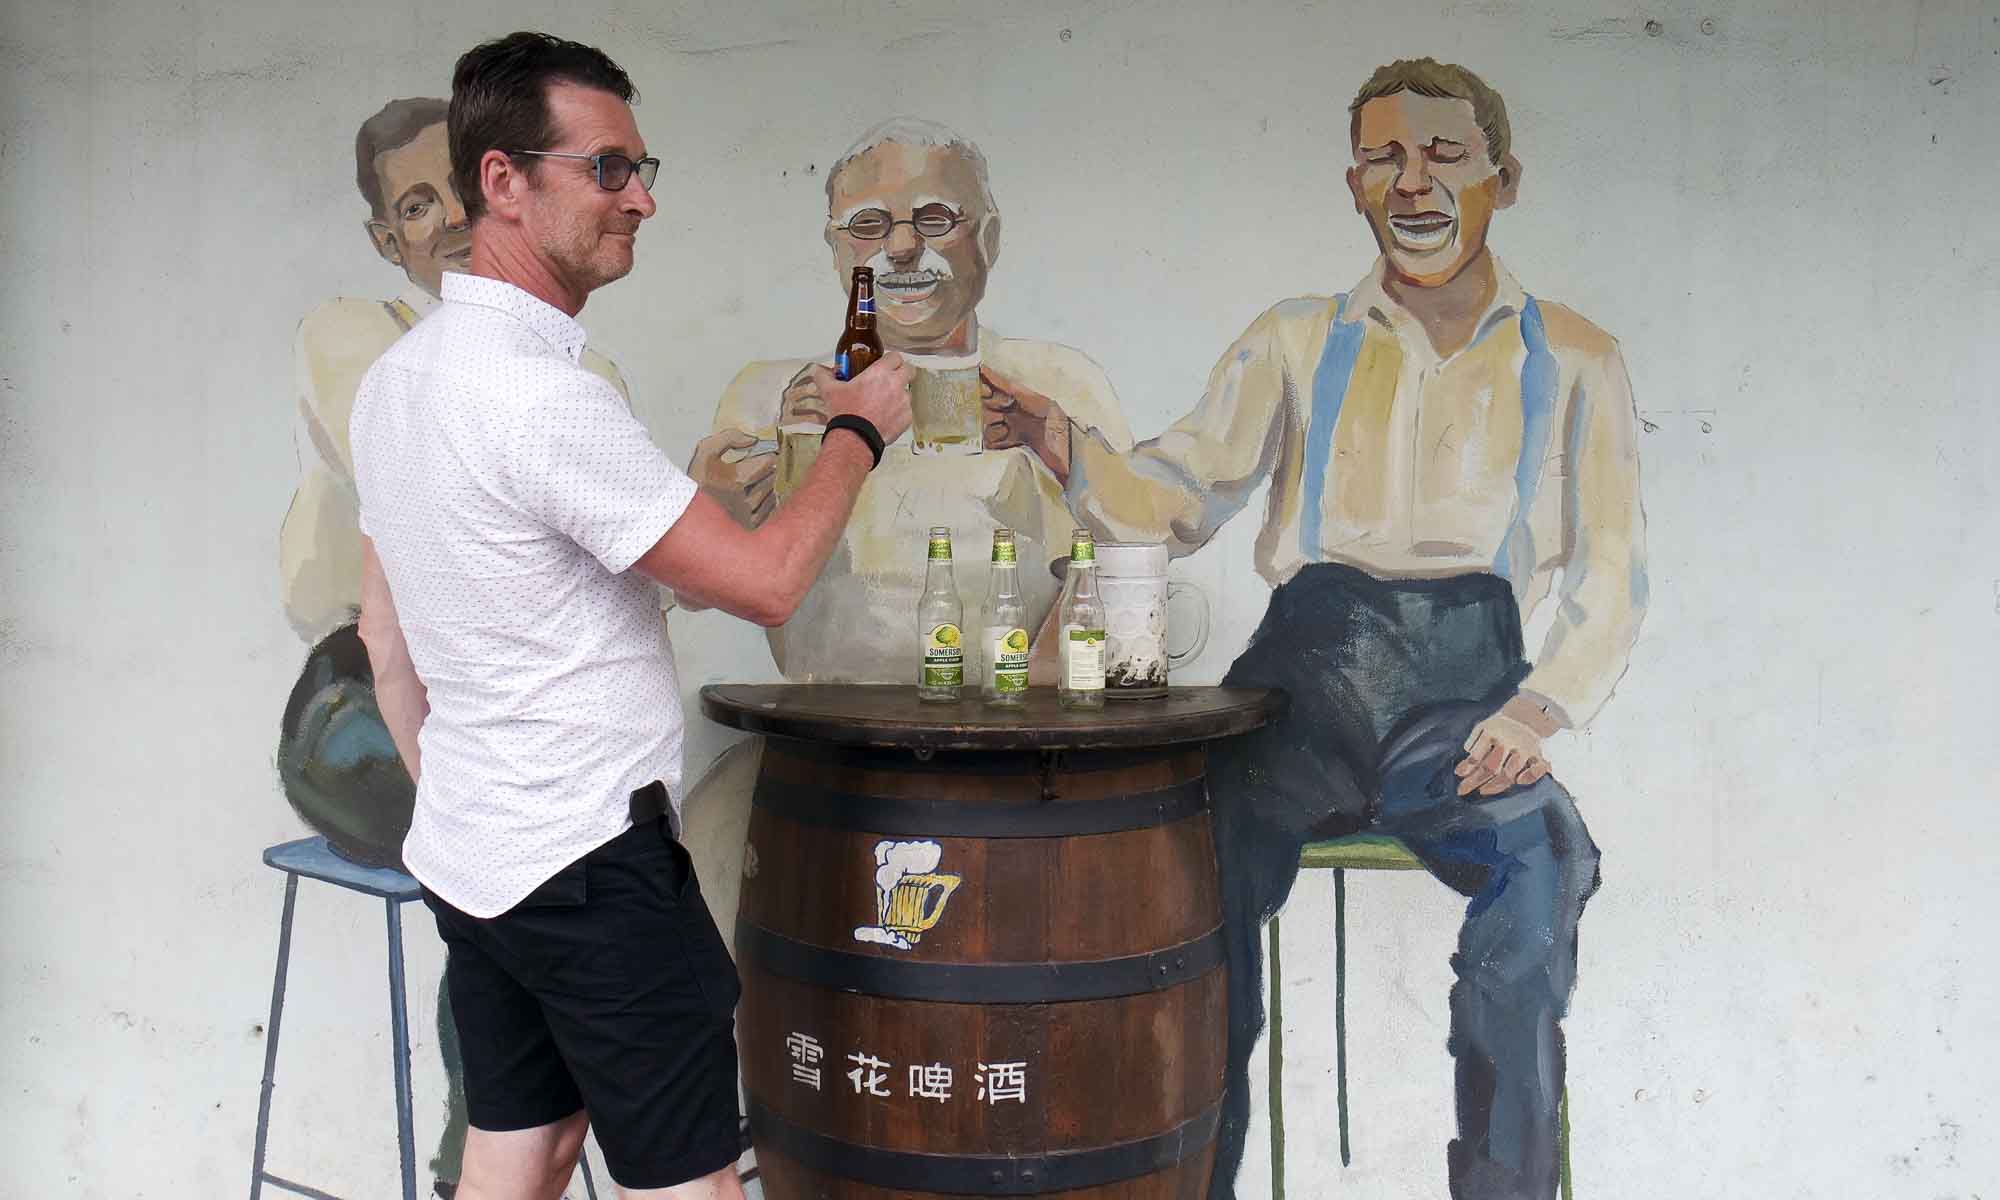 Street art: Cheers!